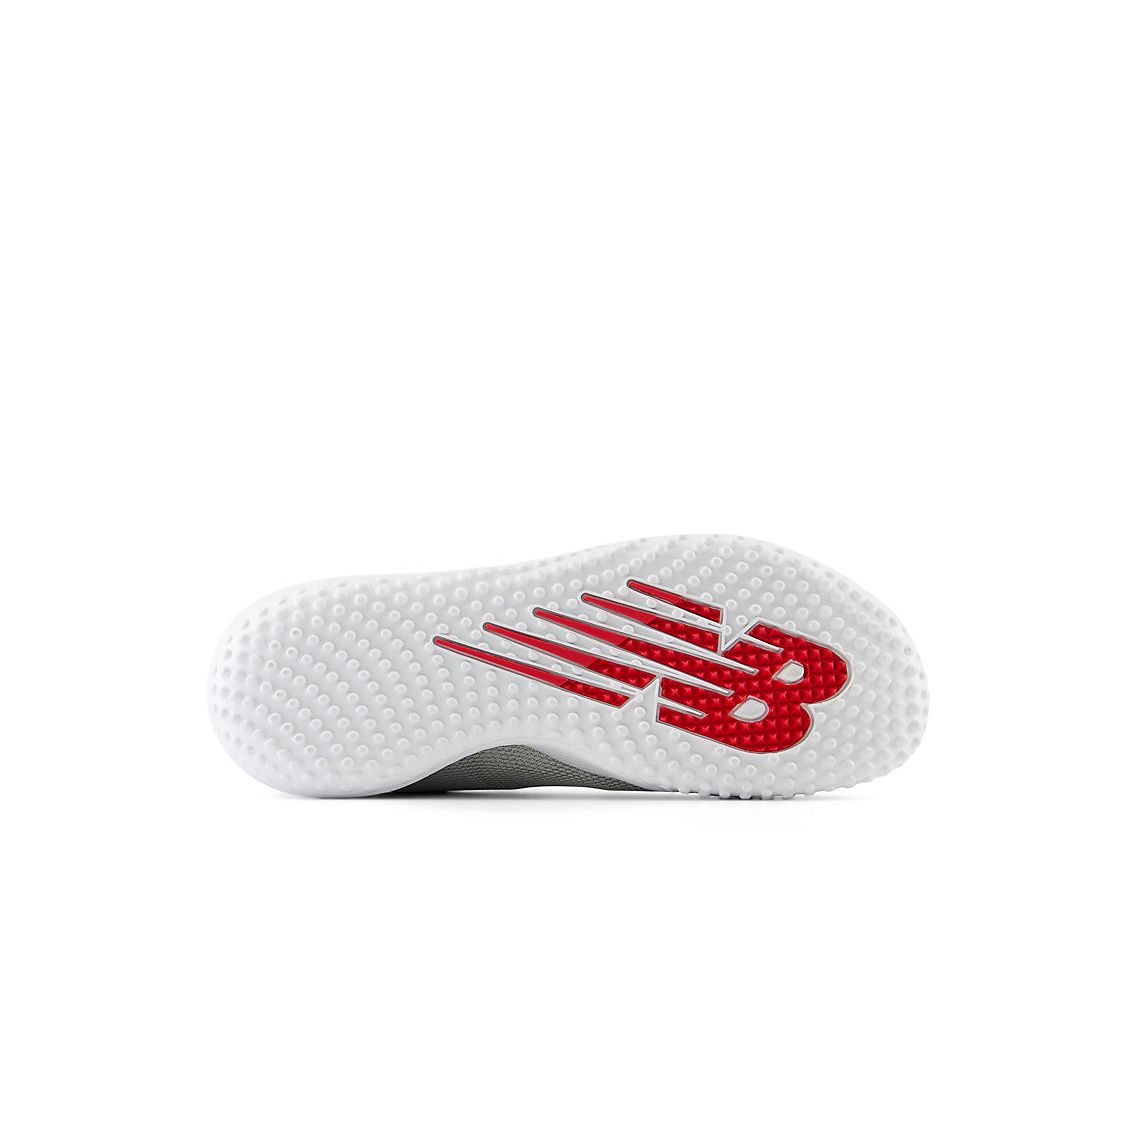 New Balance Men's FuelCell 4040 V7 Turf Baseball Shoes - Raincloud / Optic White - T4040TG7